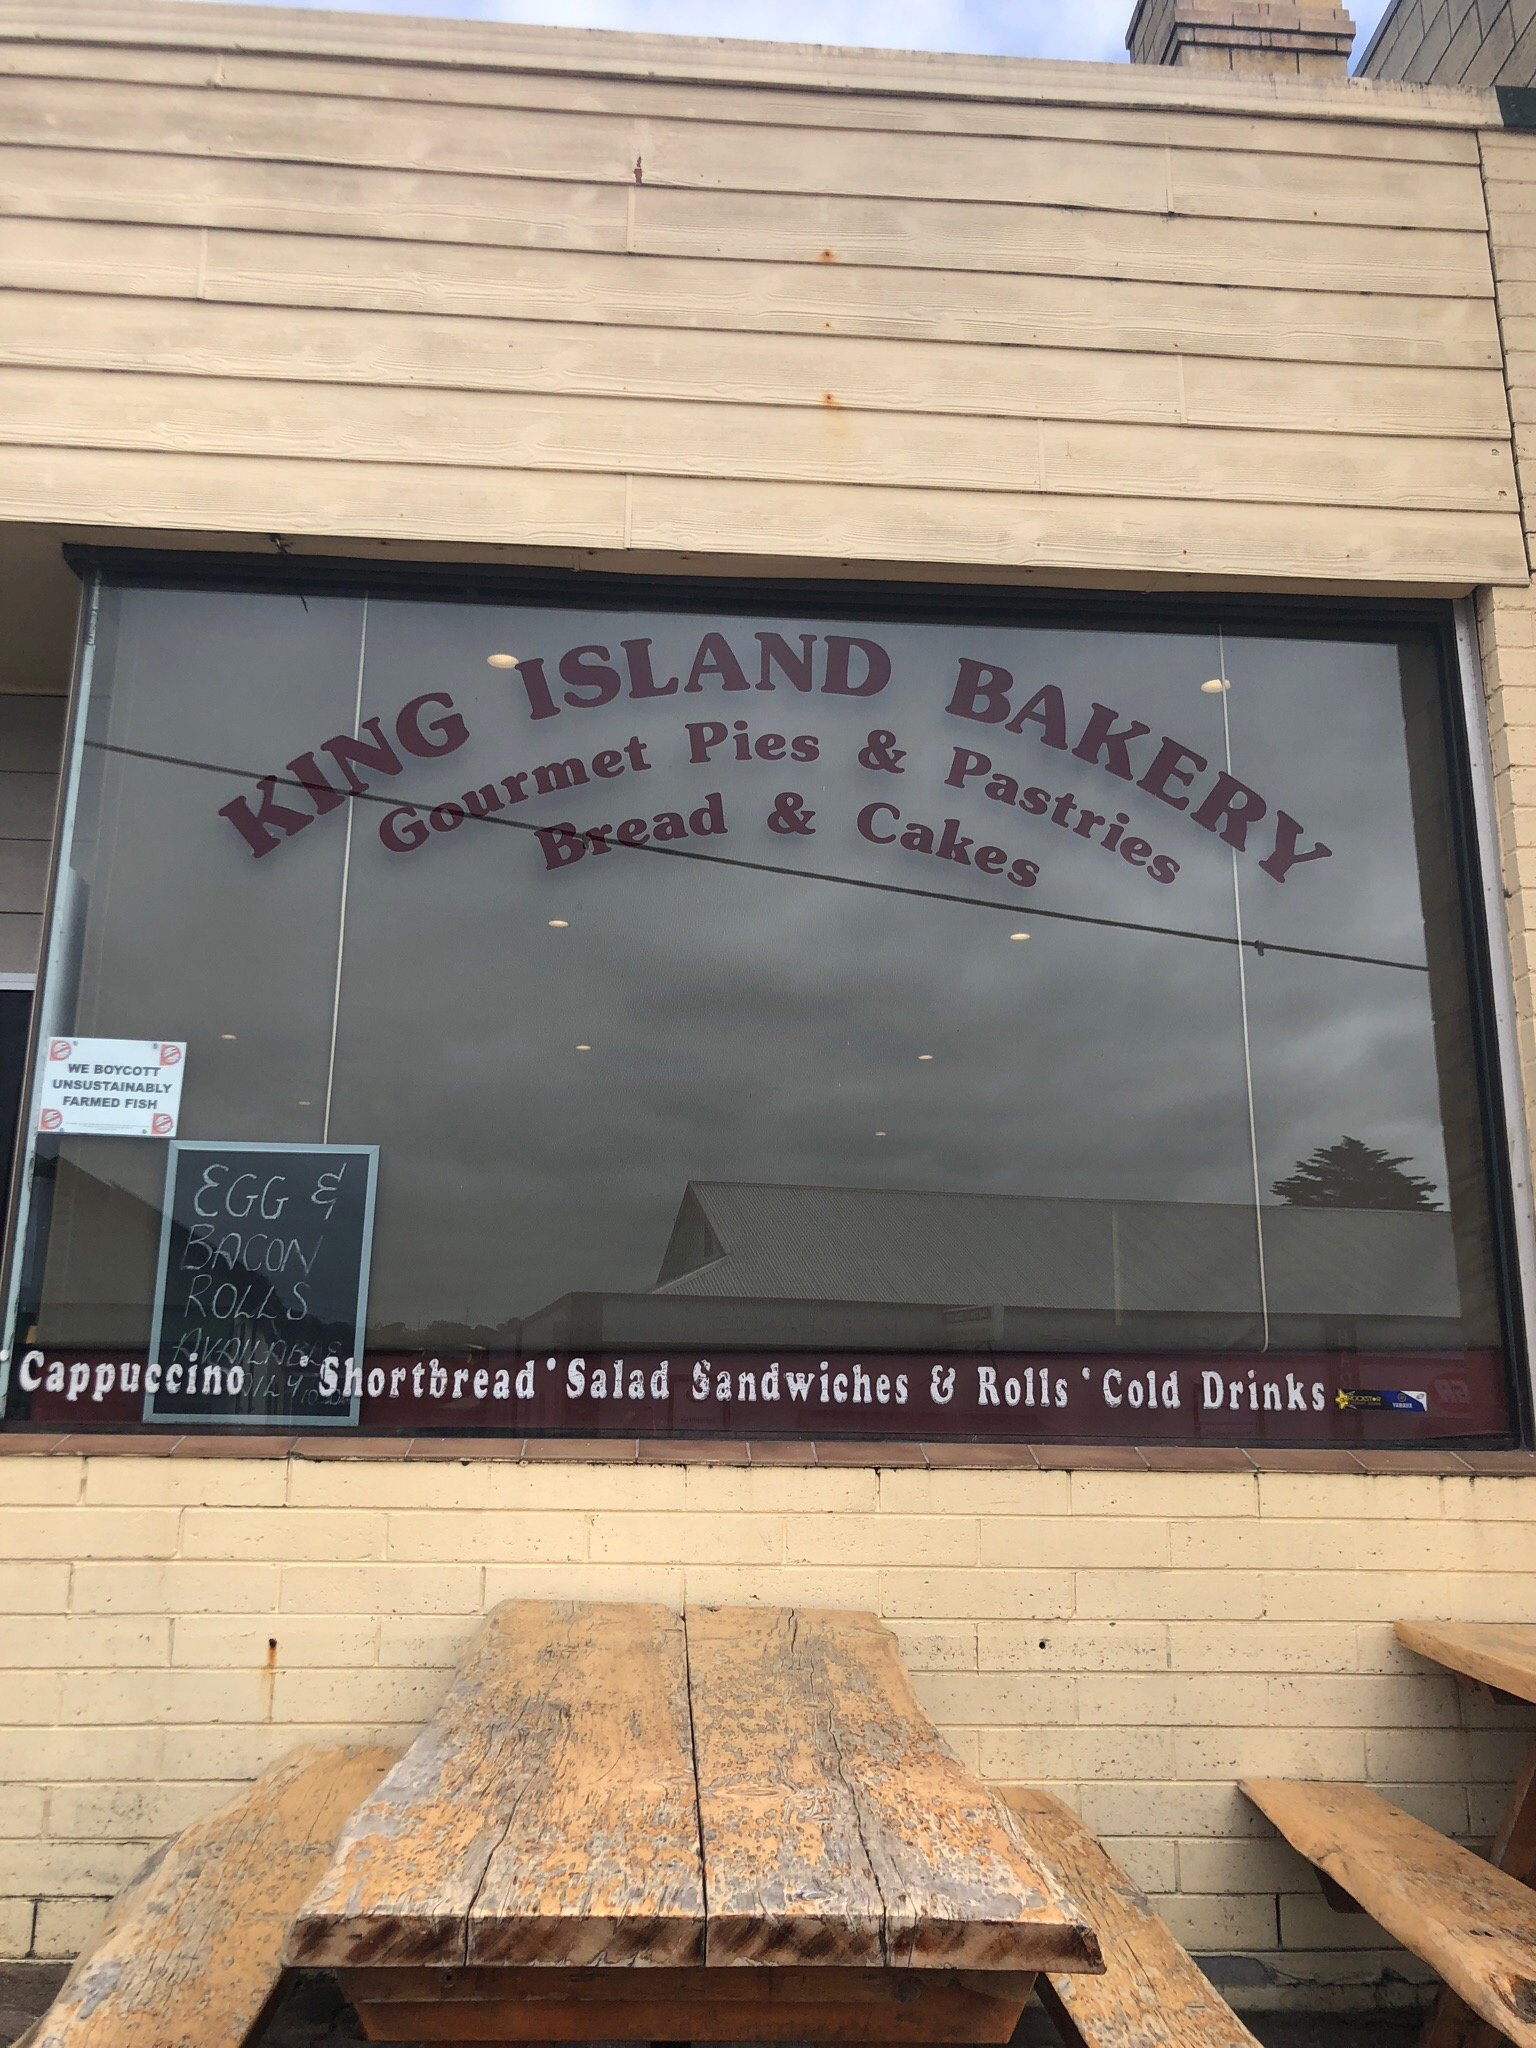 King Island Bakery - Restaurants Sydney 2